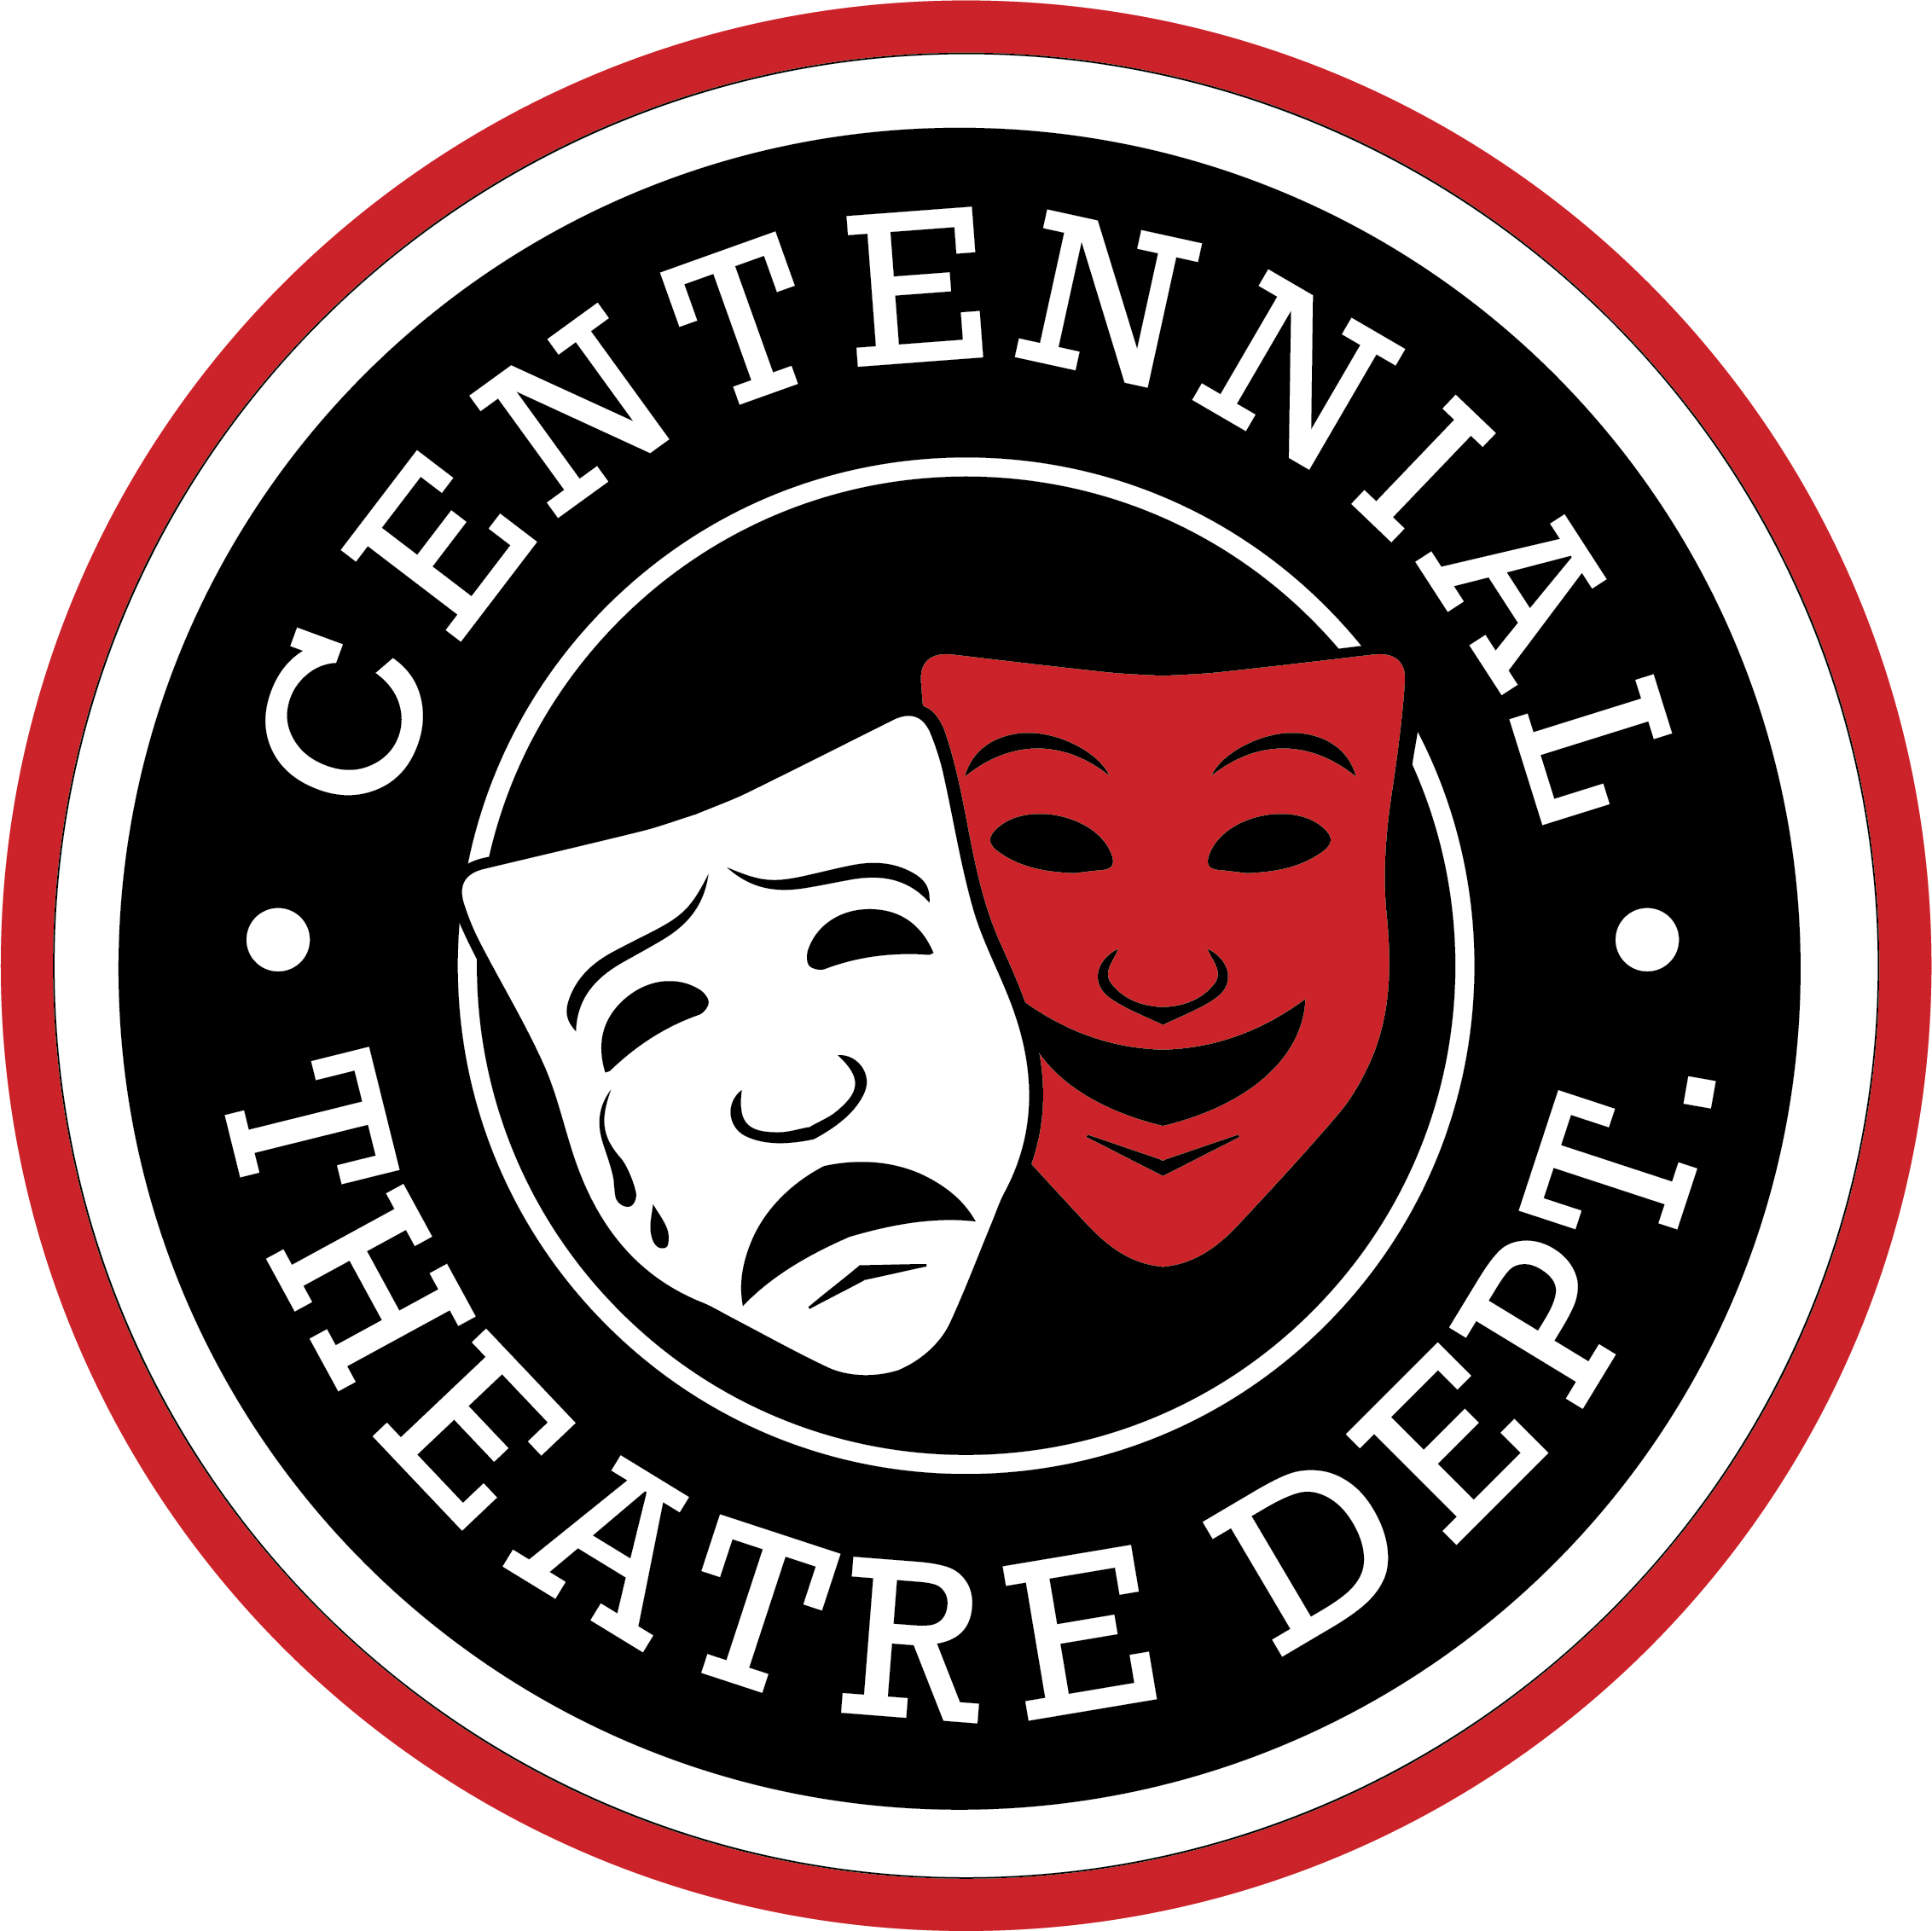 Centennial Theatre New Logo